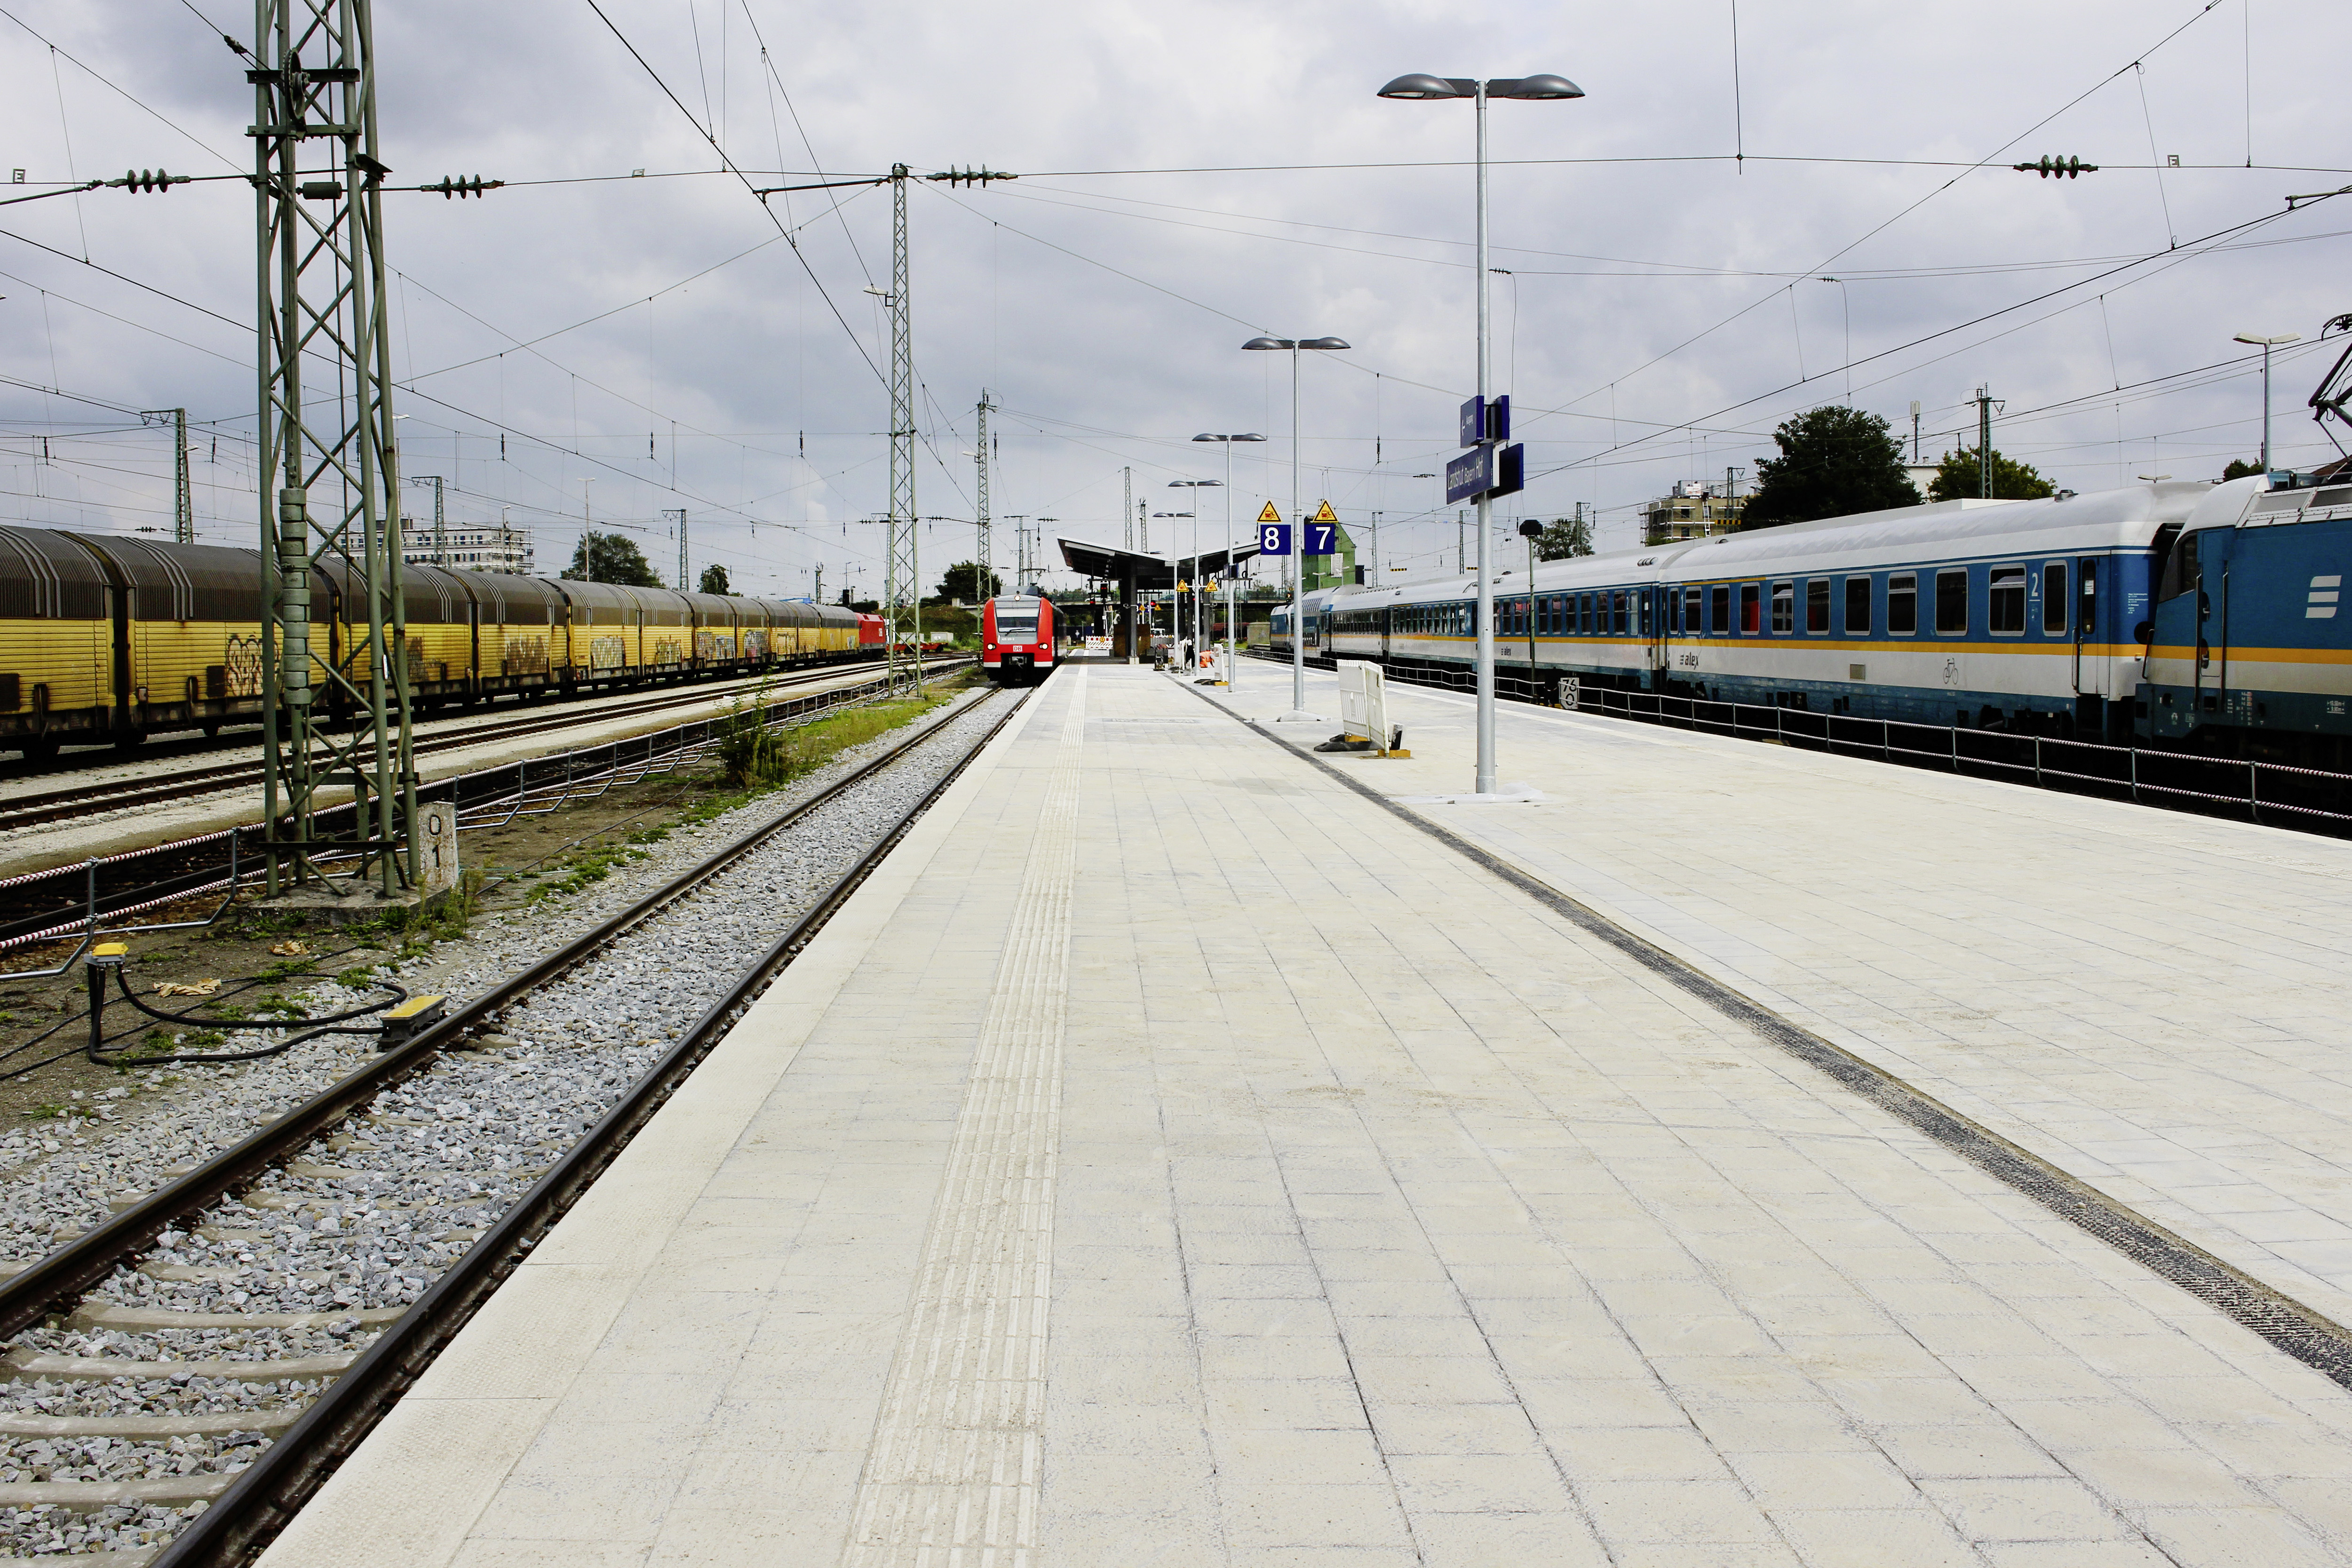 Bahnsteig, Landshut - Civil engineering